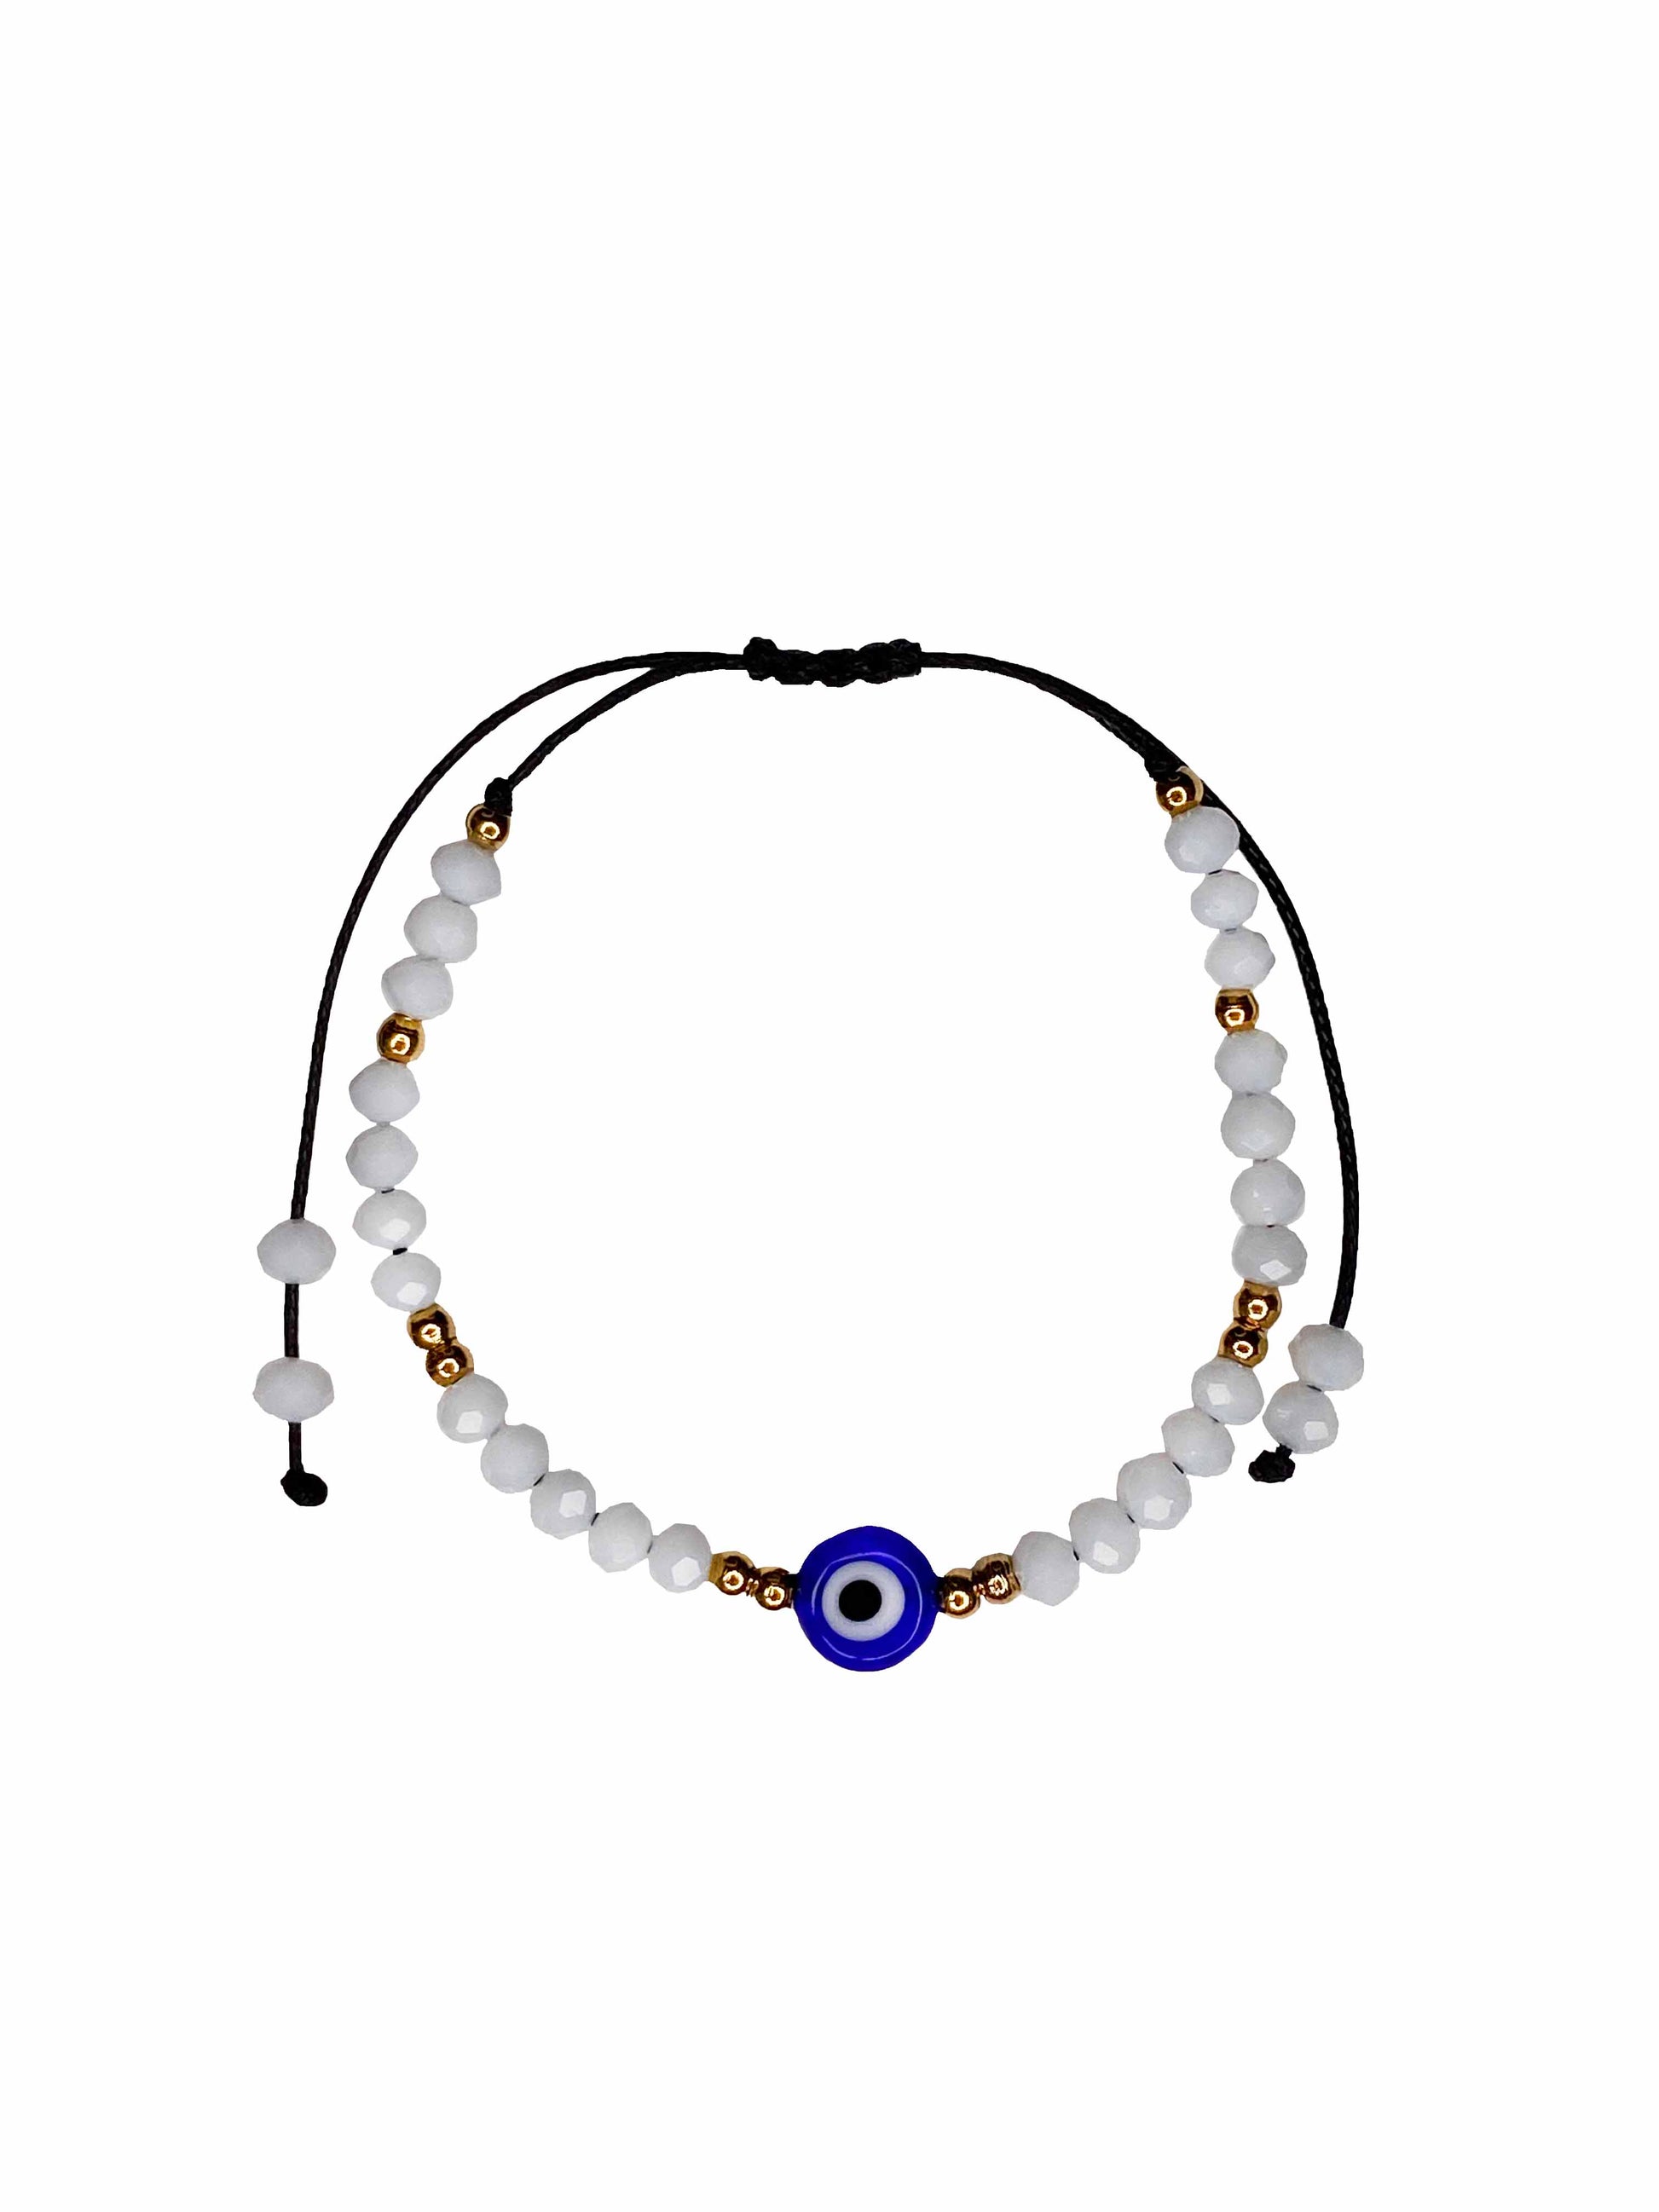 Handmade white crystal beaded nazar amulet bracelet with sliding knot ties.